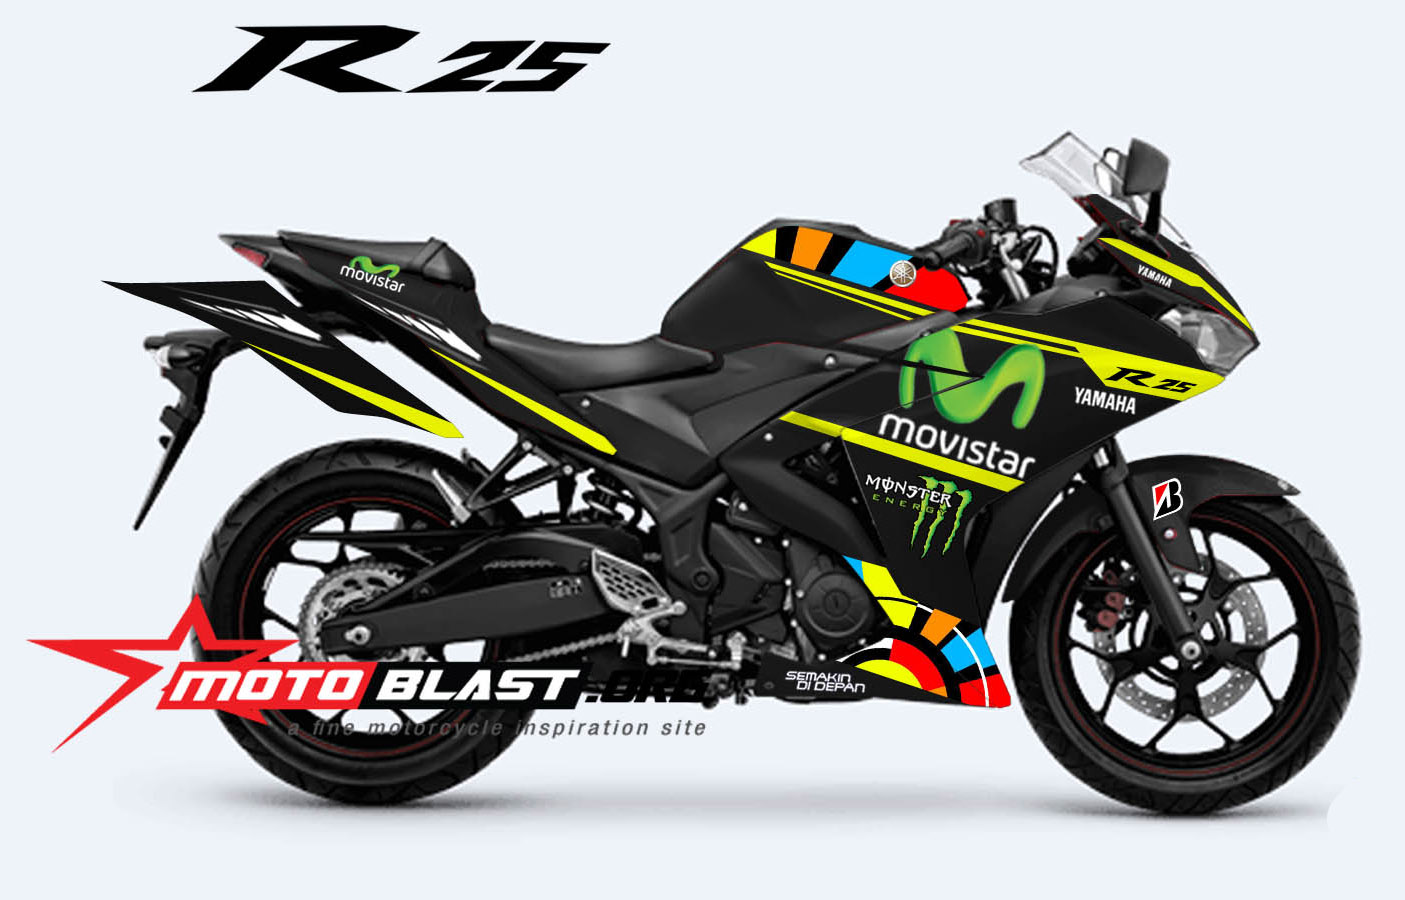 HOTModif Yamaha R25 Black VR46 Monster Tech3 Motogp Buat